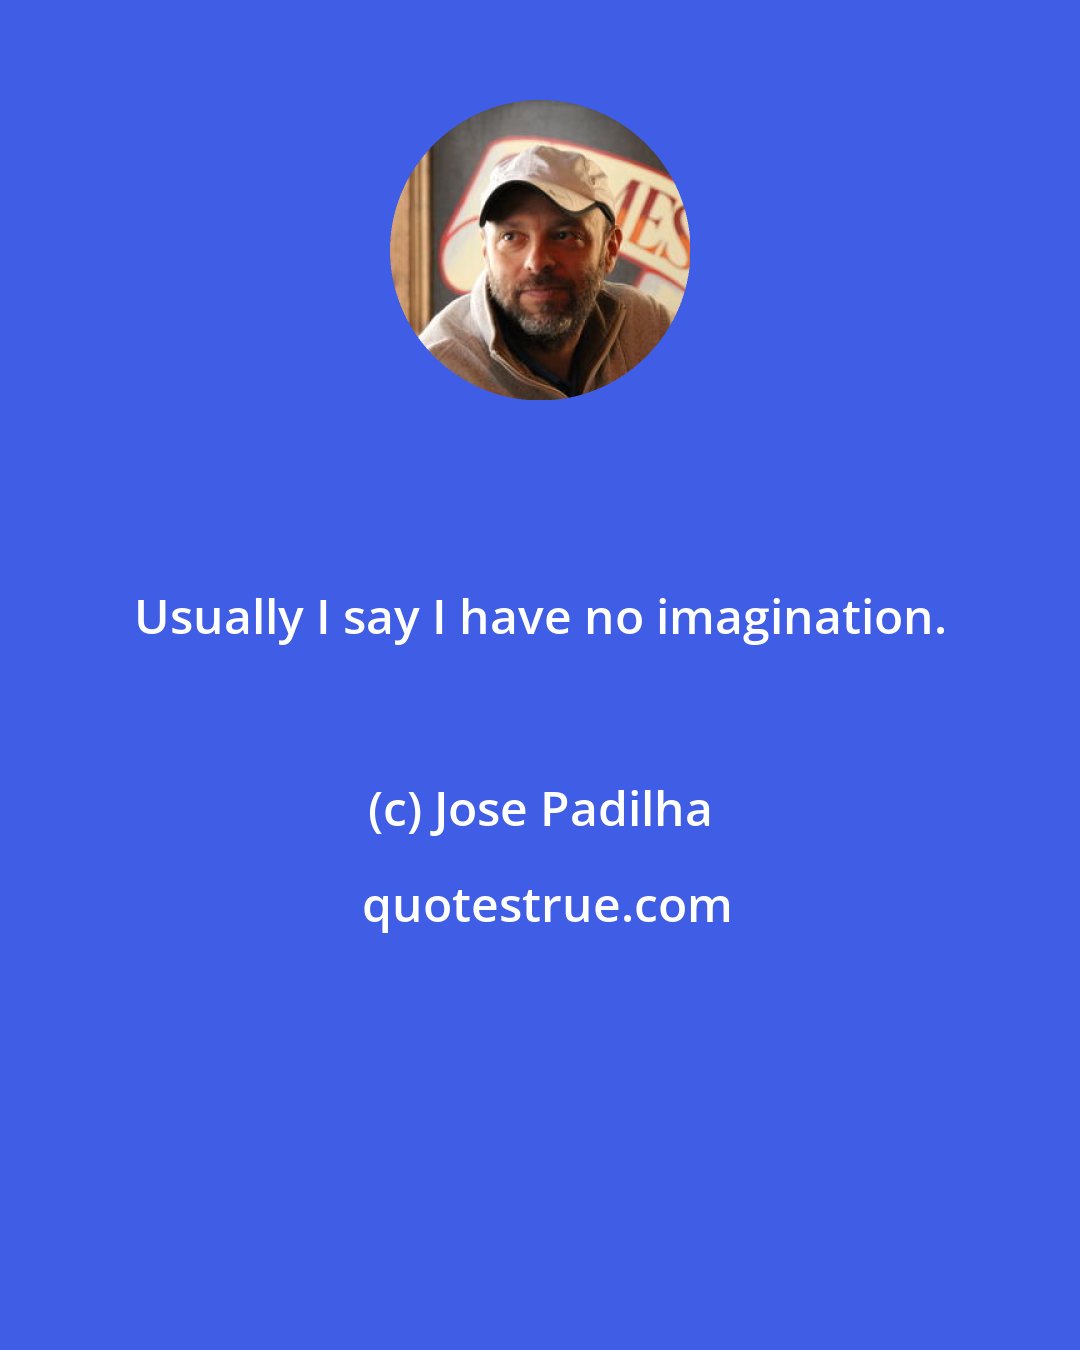 Jose Padilha: Usually I say I have no imagination.